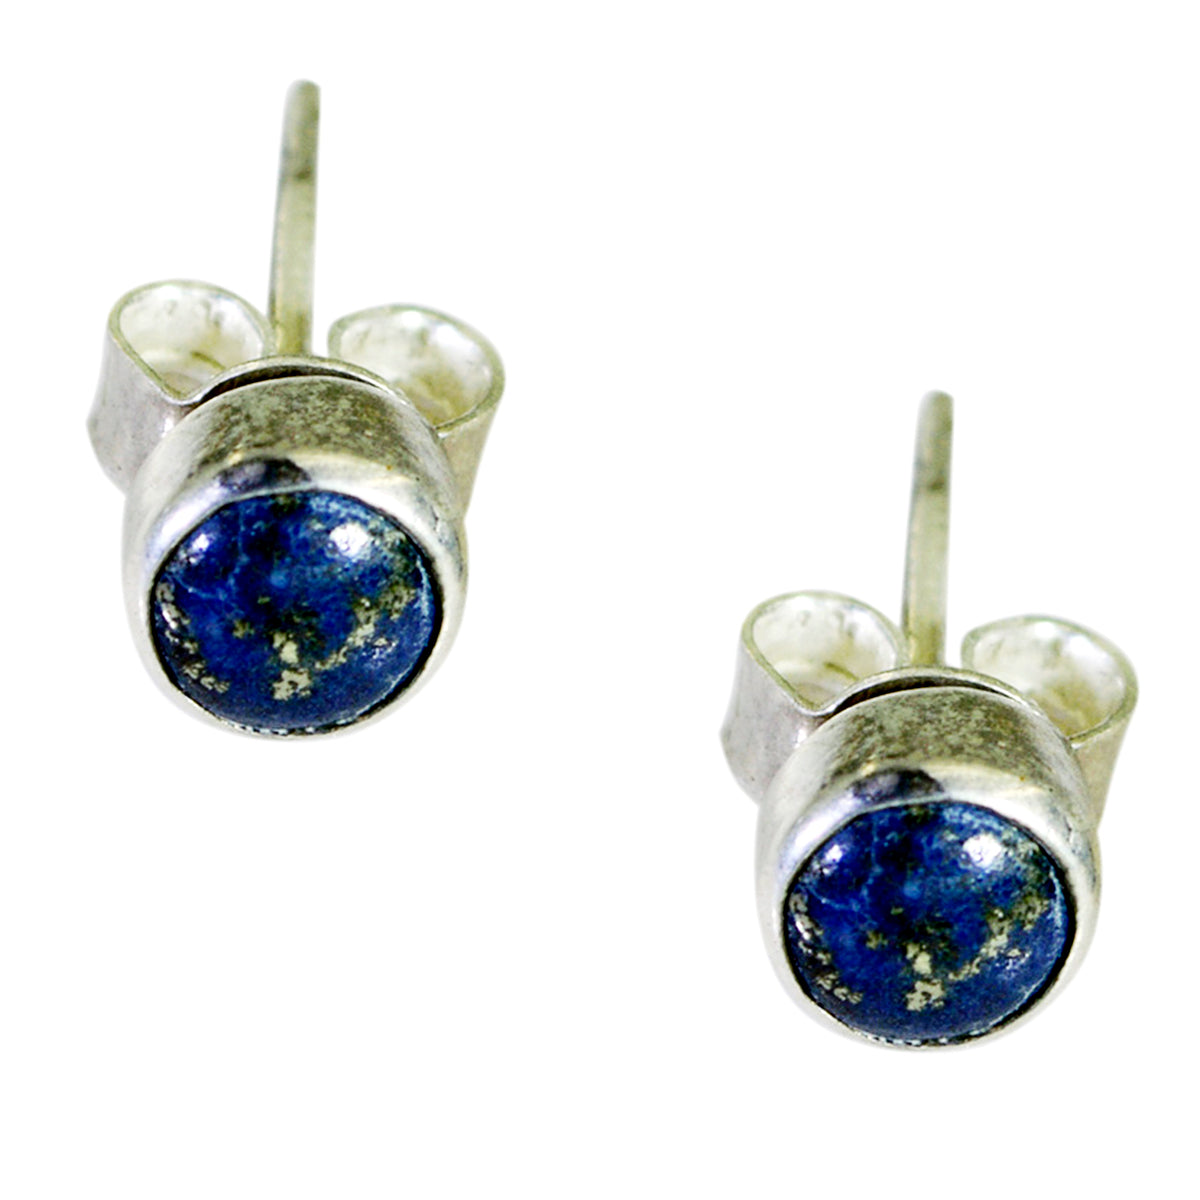 Riyo Real Gemstones round Cabochon Nevy Blue Lapis Lazuli Silver Earrings gift